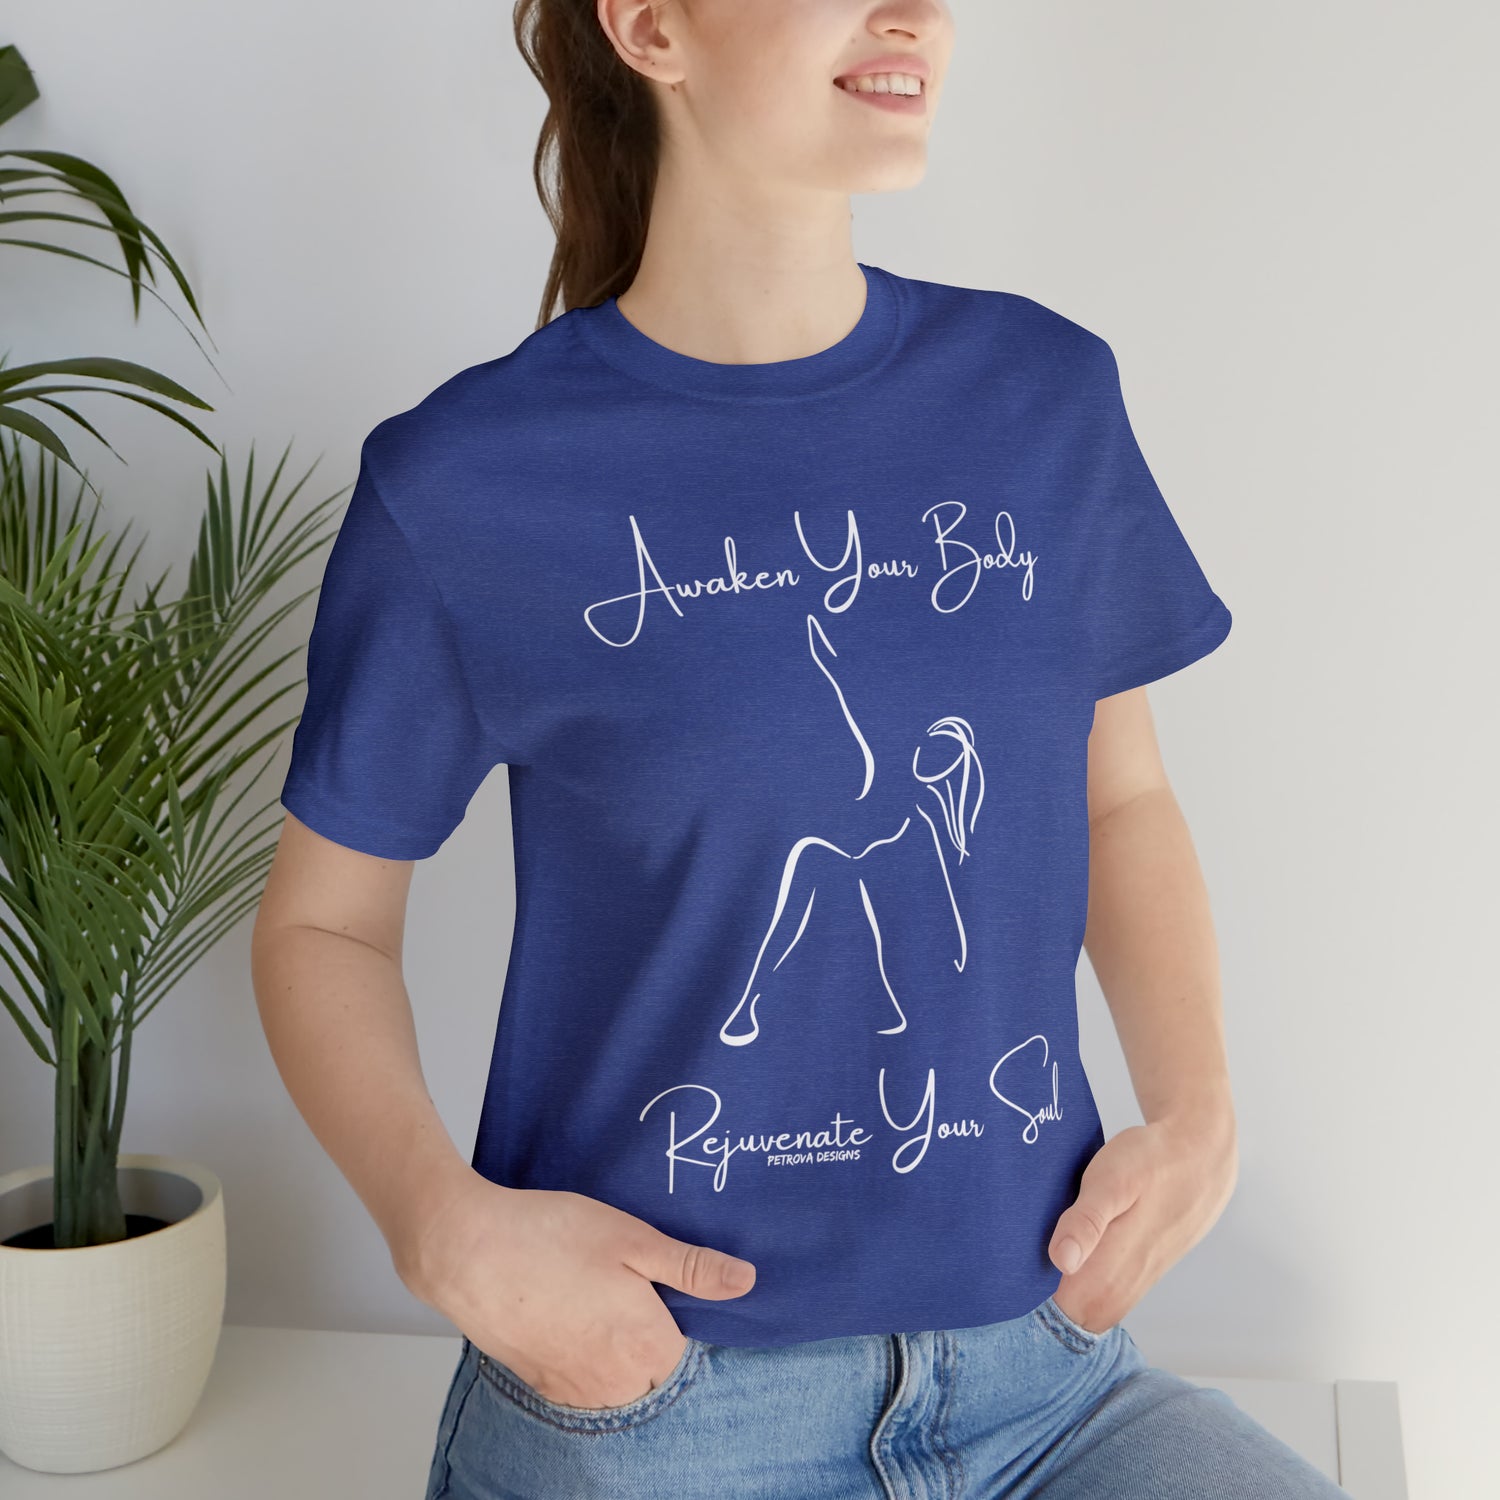 Heather True Royal T-Shirt Tshirt Design Gift for Friend and Family Short Sleeved Shirt Yoga Petrova Designs